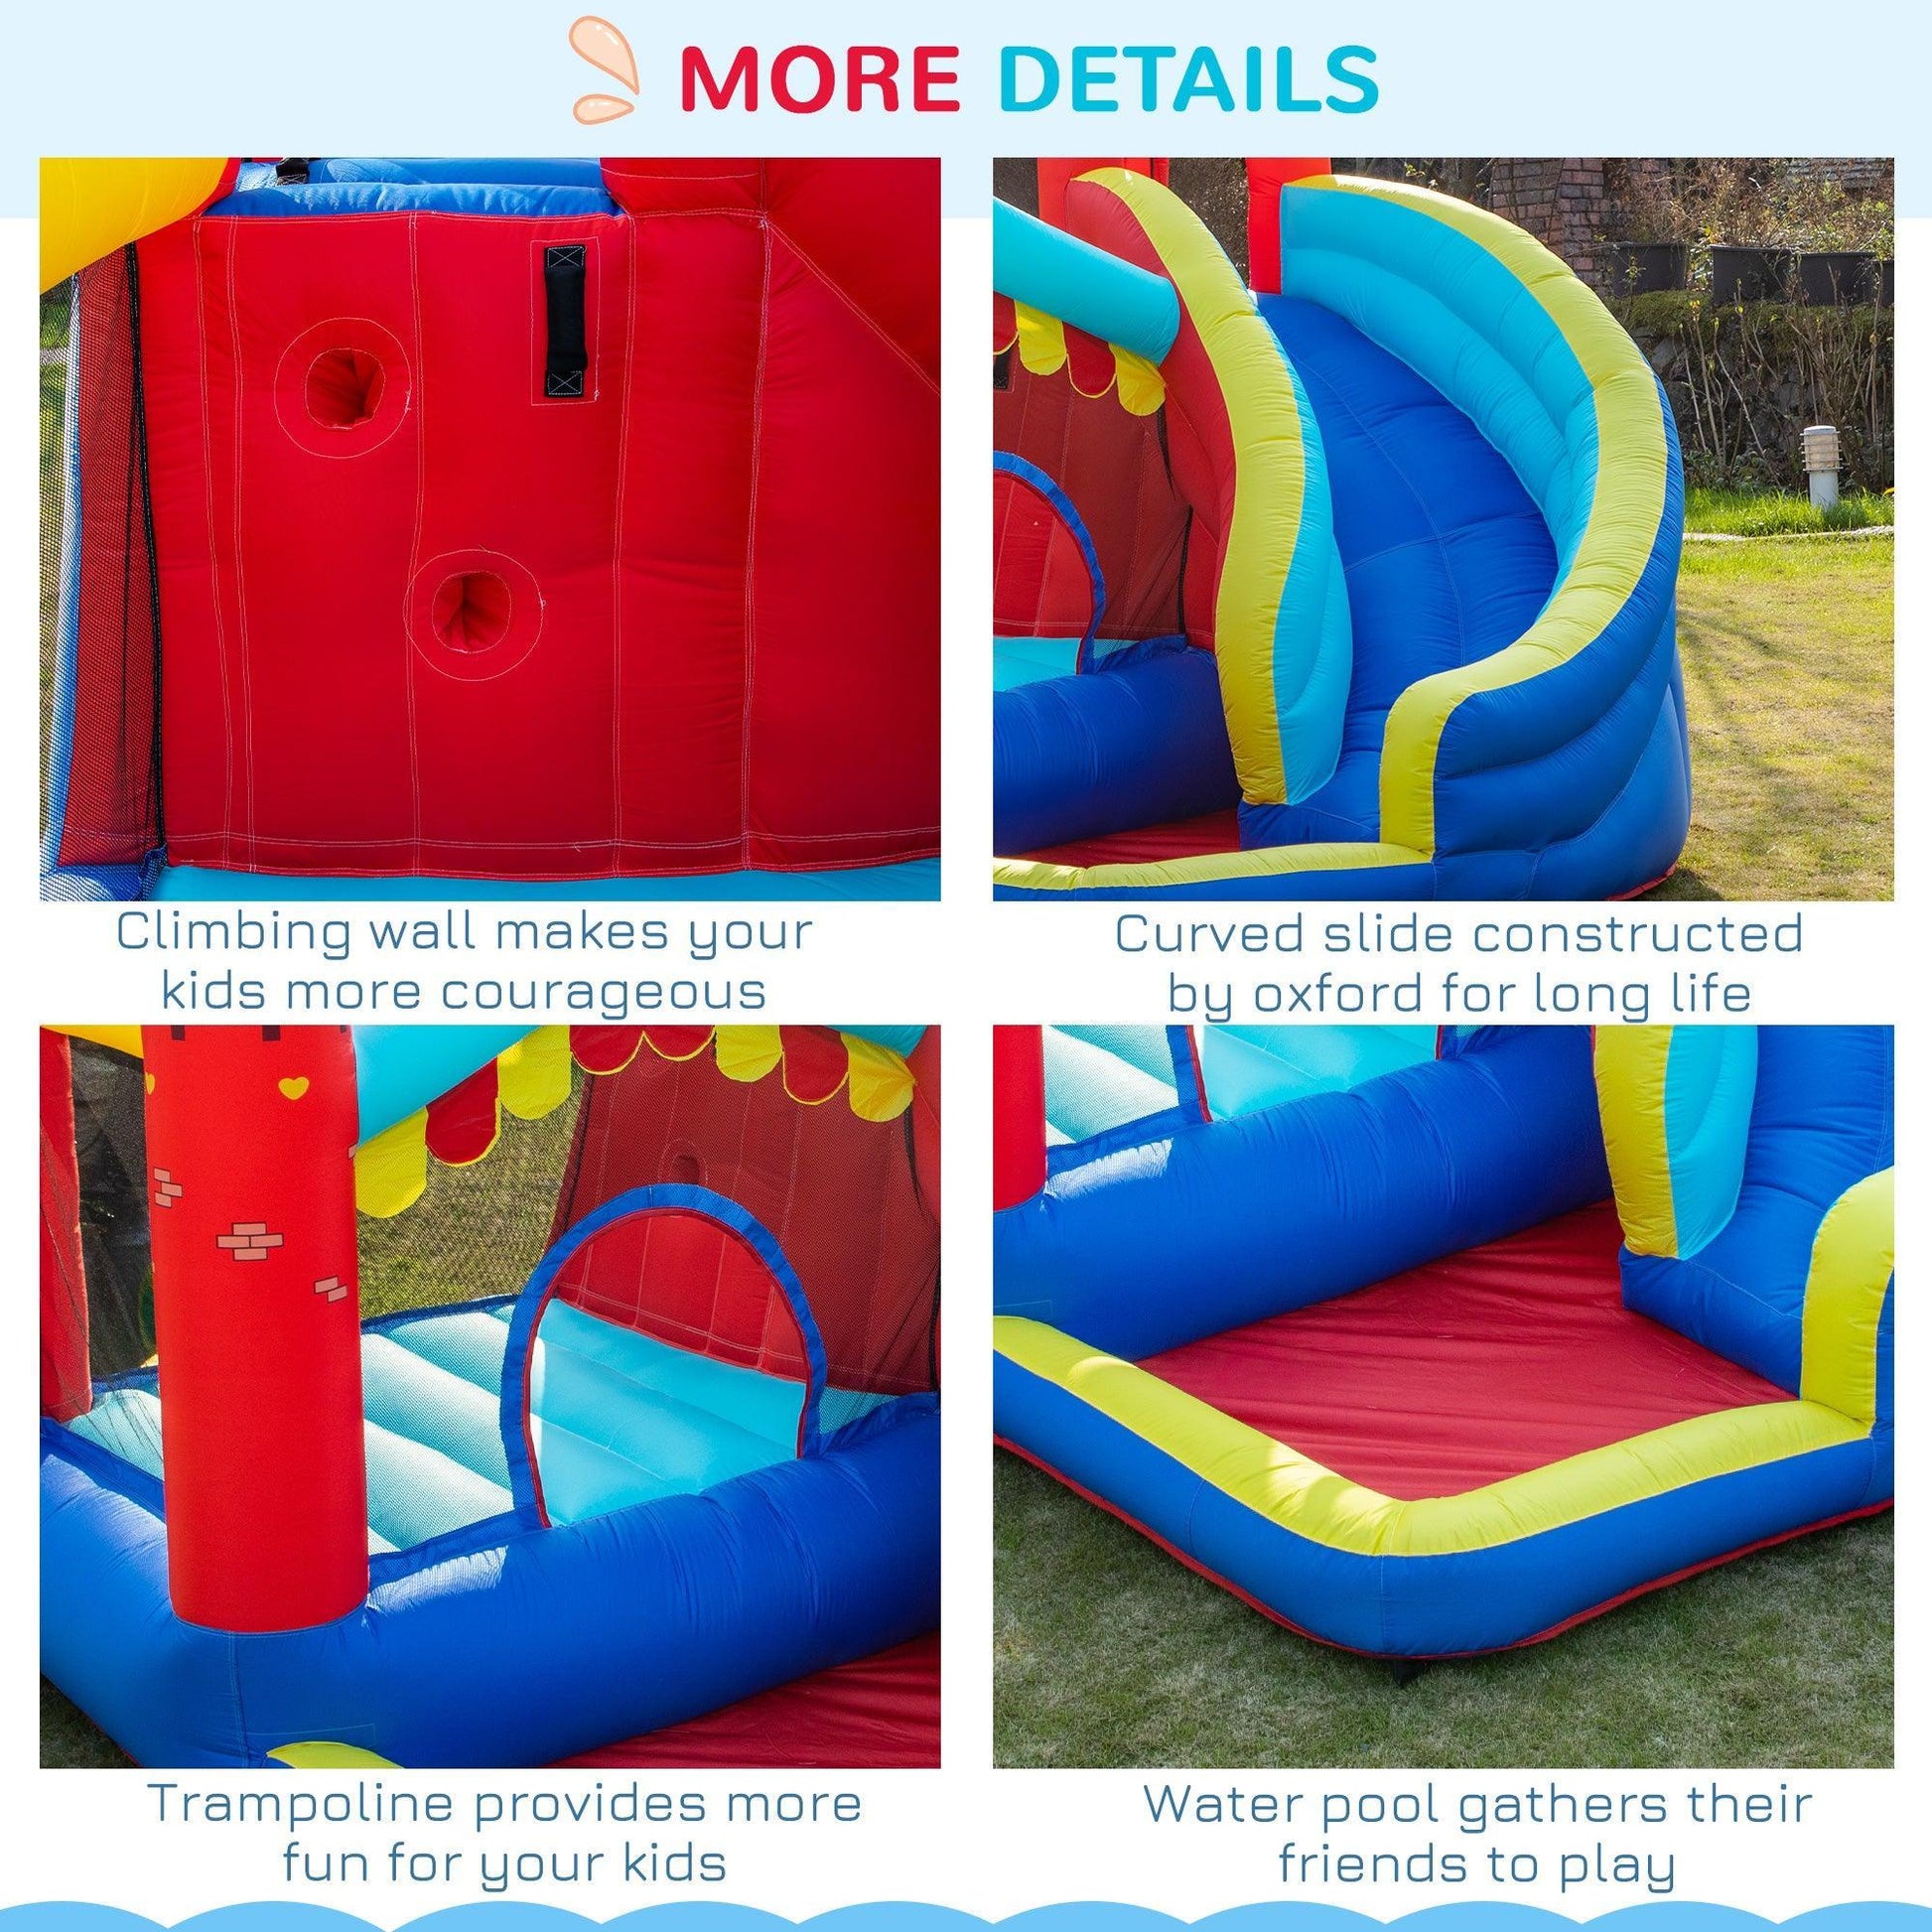 Outsunny Versatile Kids Bounce Castle with Slide & Pool - ALL4U RETAILER LTD